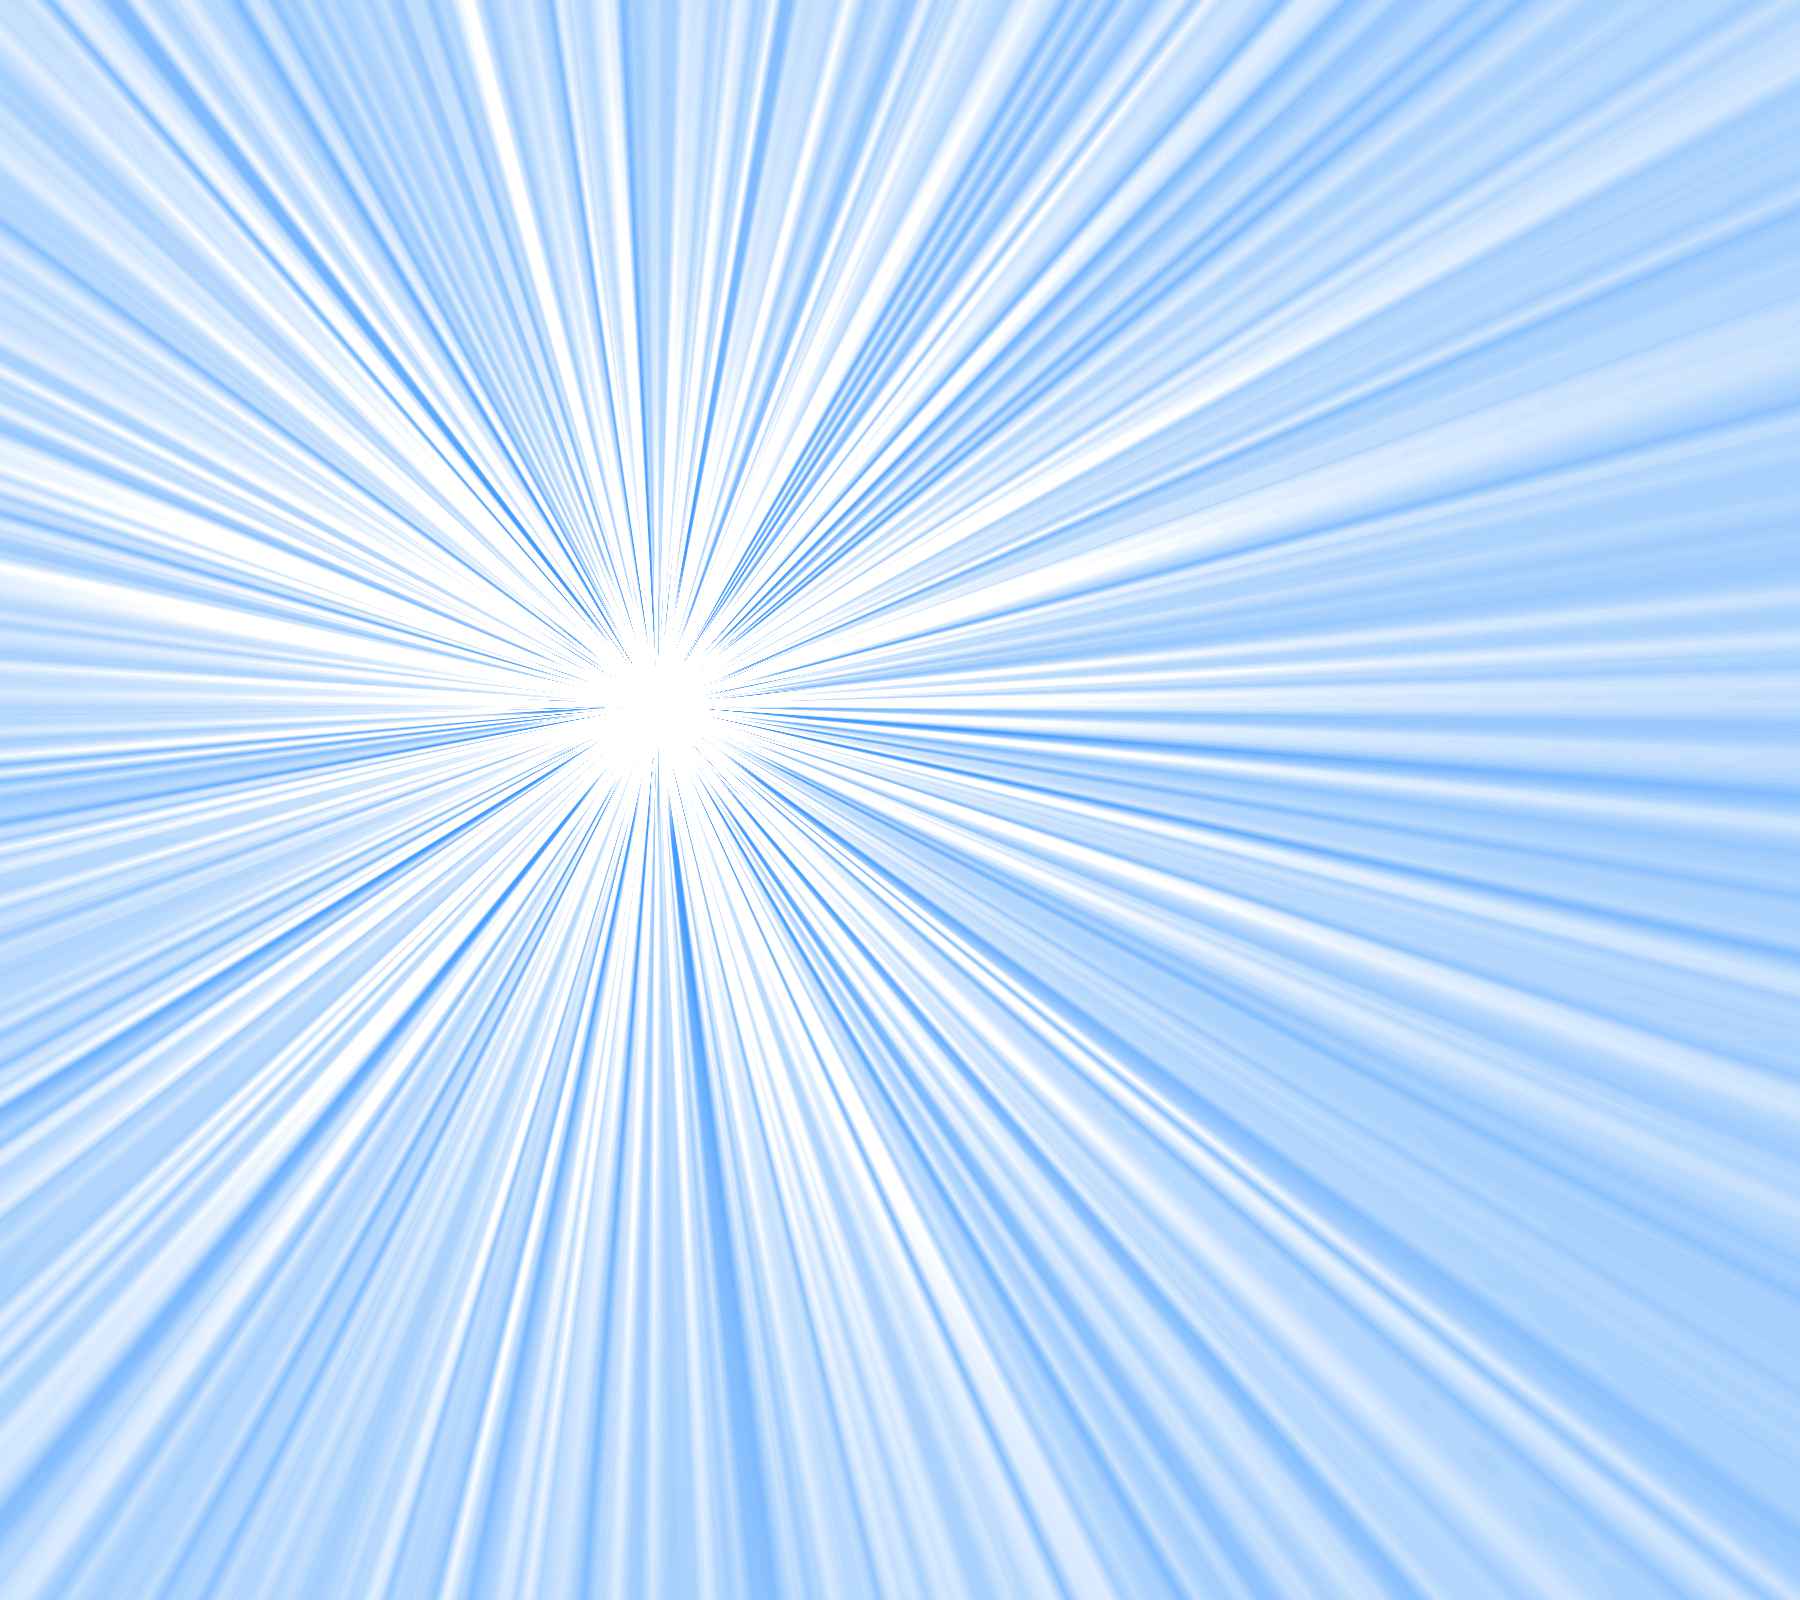 Background Wallpaper Image Baby Blue Starburst Radiating Lines